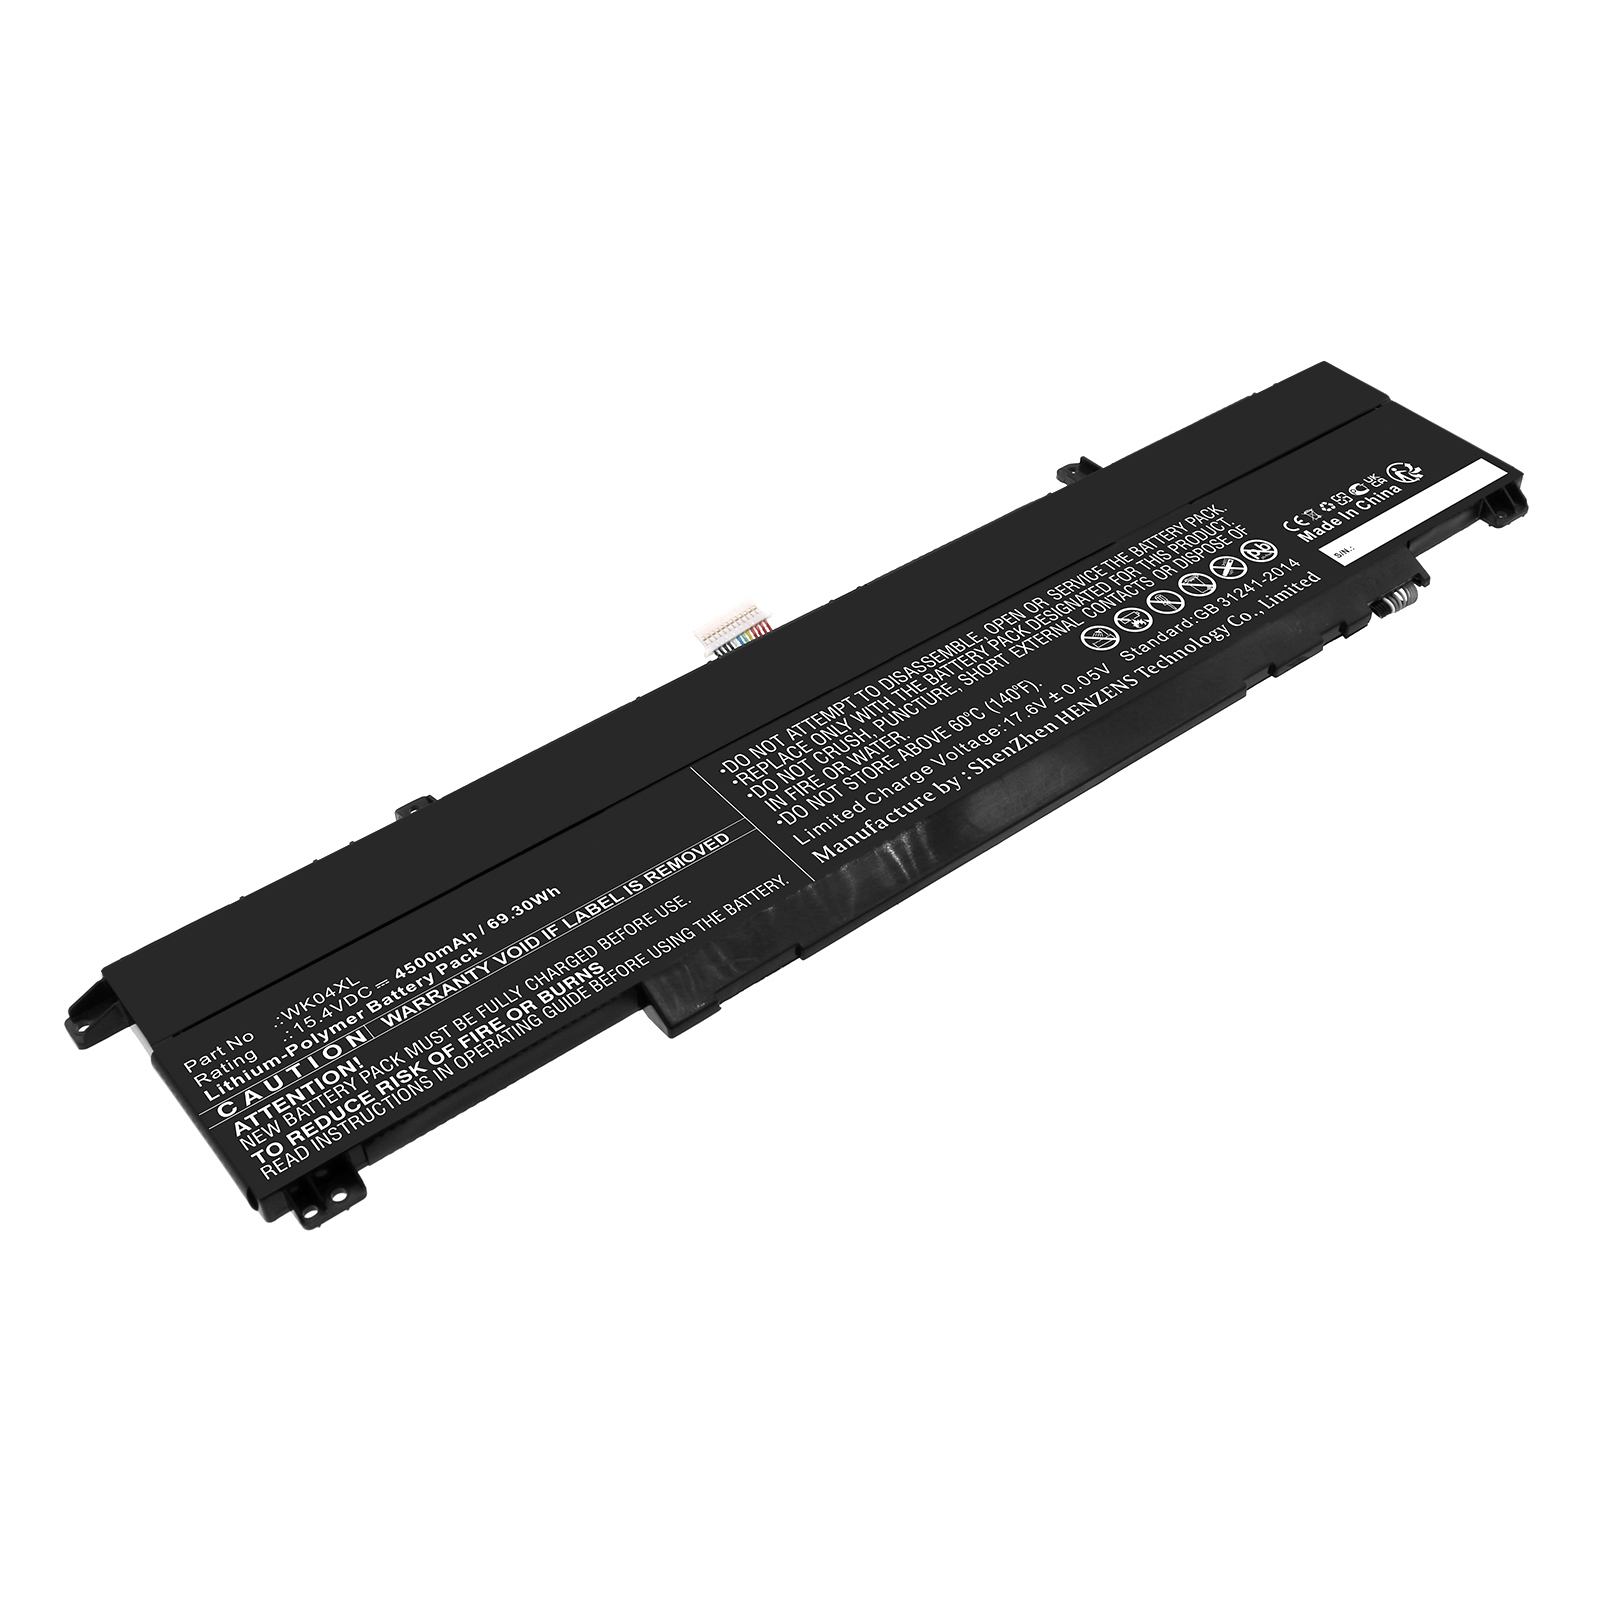 Synergy Digital Laptop Battery, Compatible with HP HSTNN-IB9V Laptop Battery (Li-Pol, 15.4V, 4500mAh)